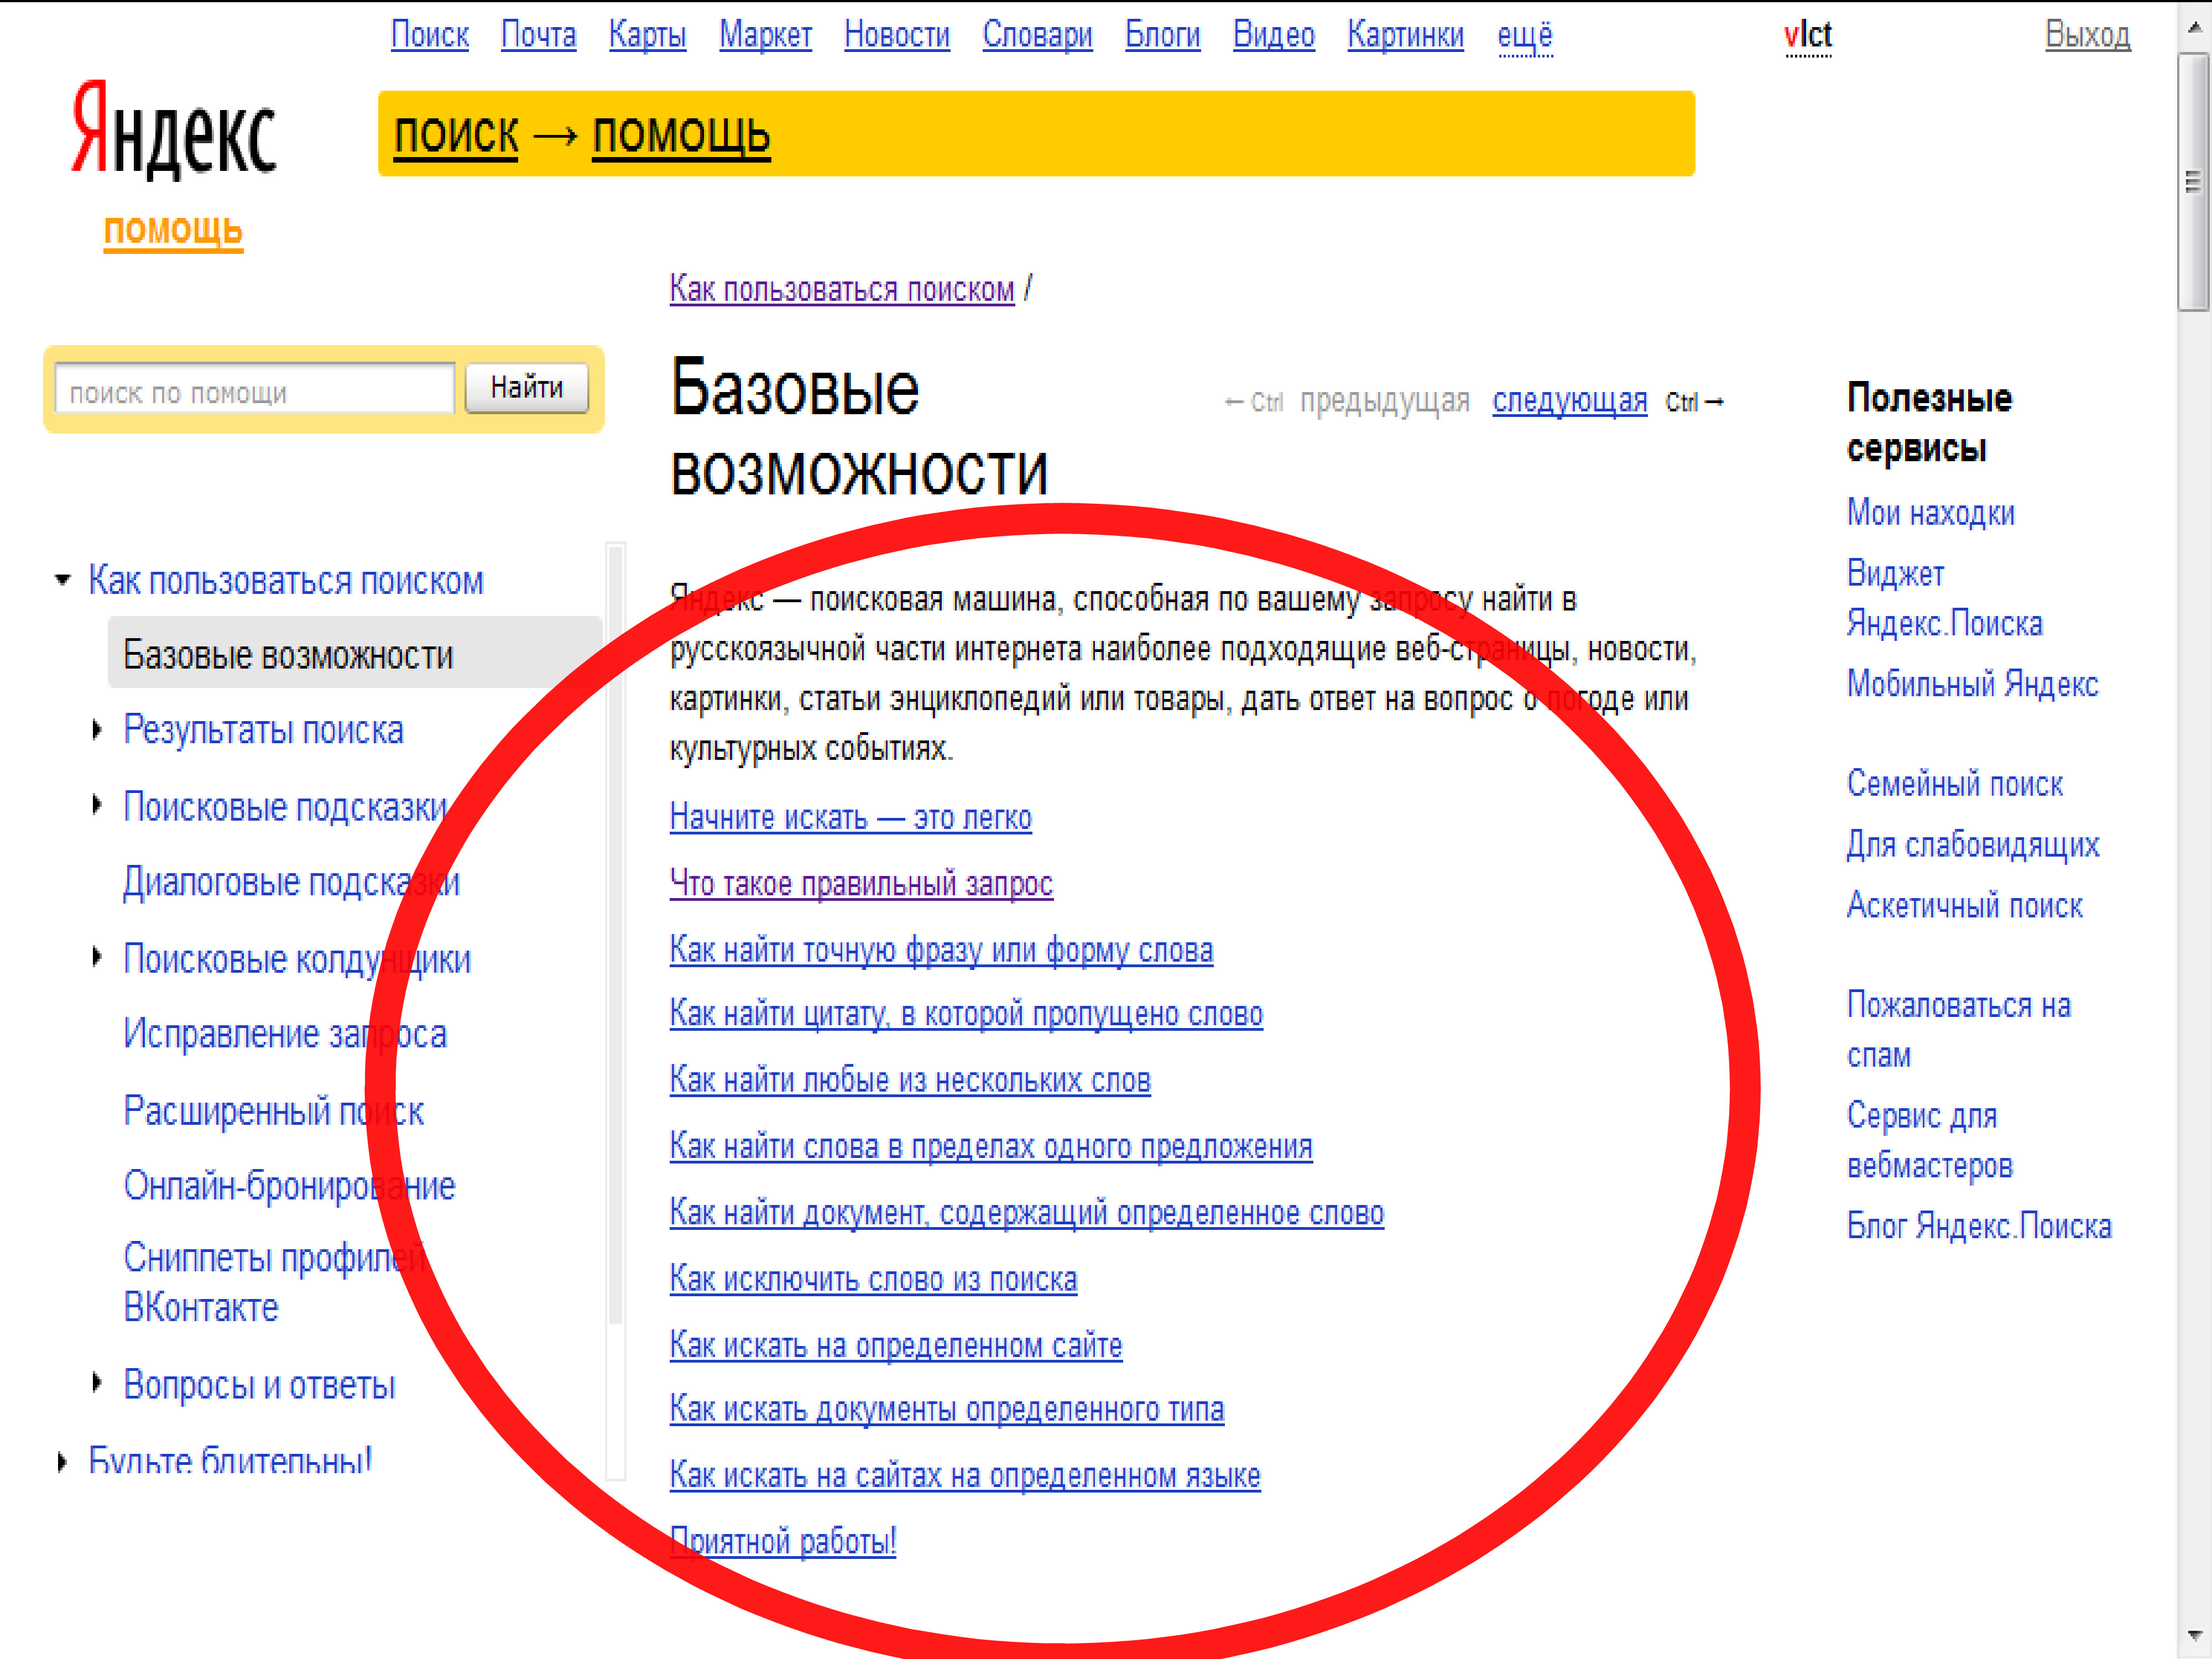 История поиска в интернете. Ищу в Яндексе. Найди Поисковик. Поиск картинки в интернете по картинке. Как искать в интернете по картинке.